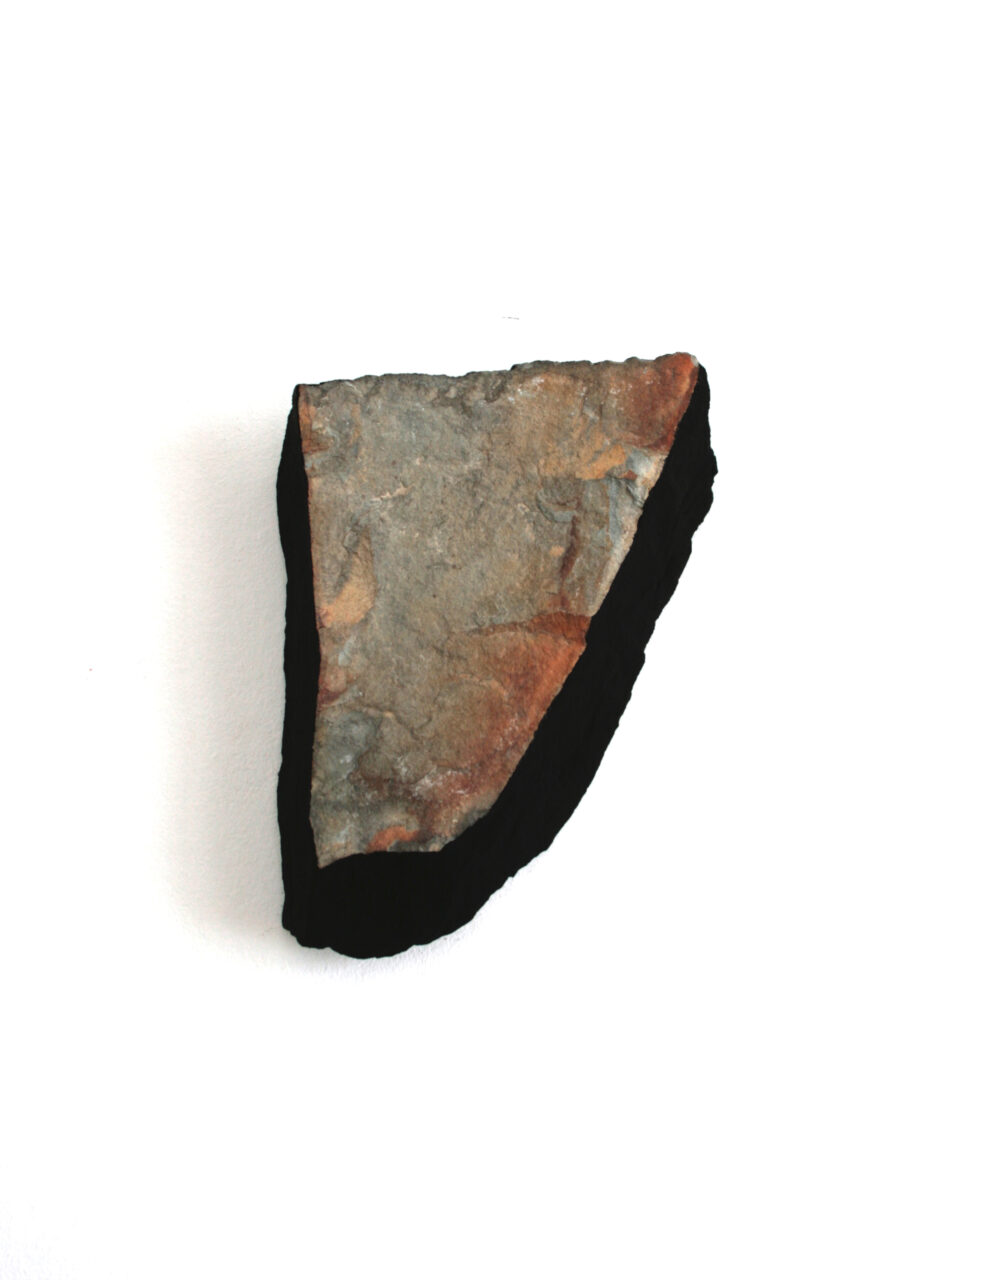 MORNING IN THE BOWL OF NIGHT ( V ) after Rubáiyát of Omar Khayyám, 2022, Cumbrian stone fragment, iron oxide and ultra-black resin 16.0 x 12.0 x 2.7cm